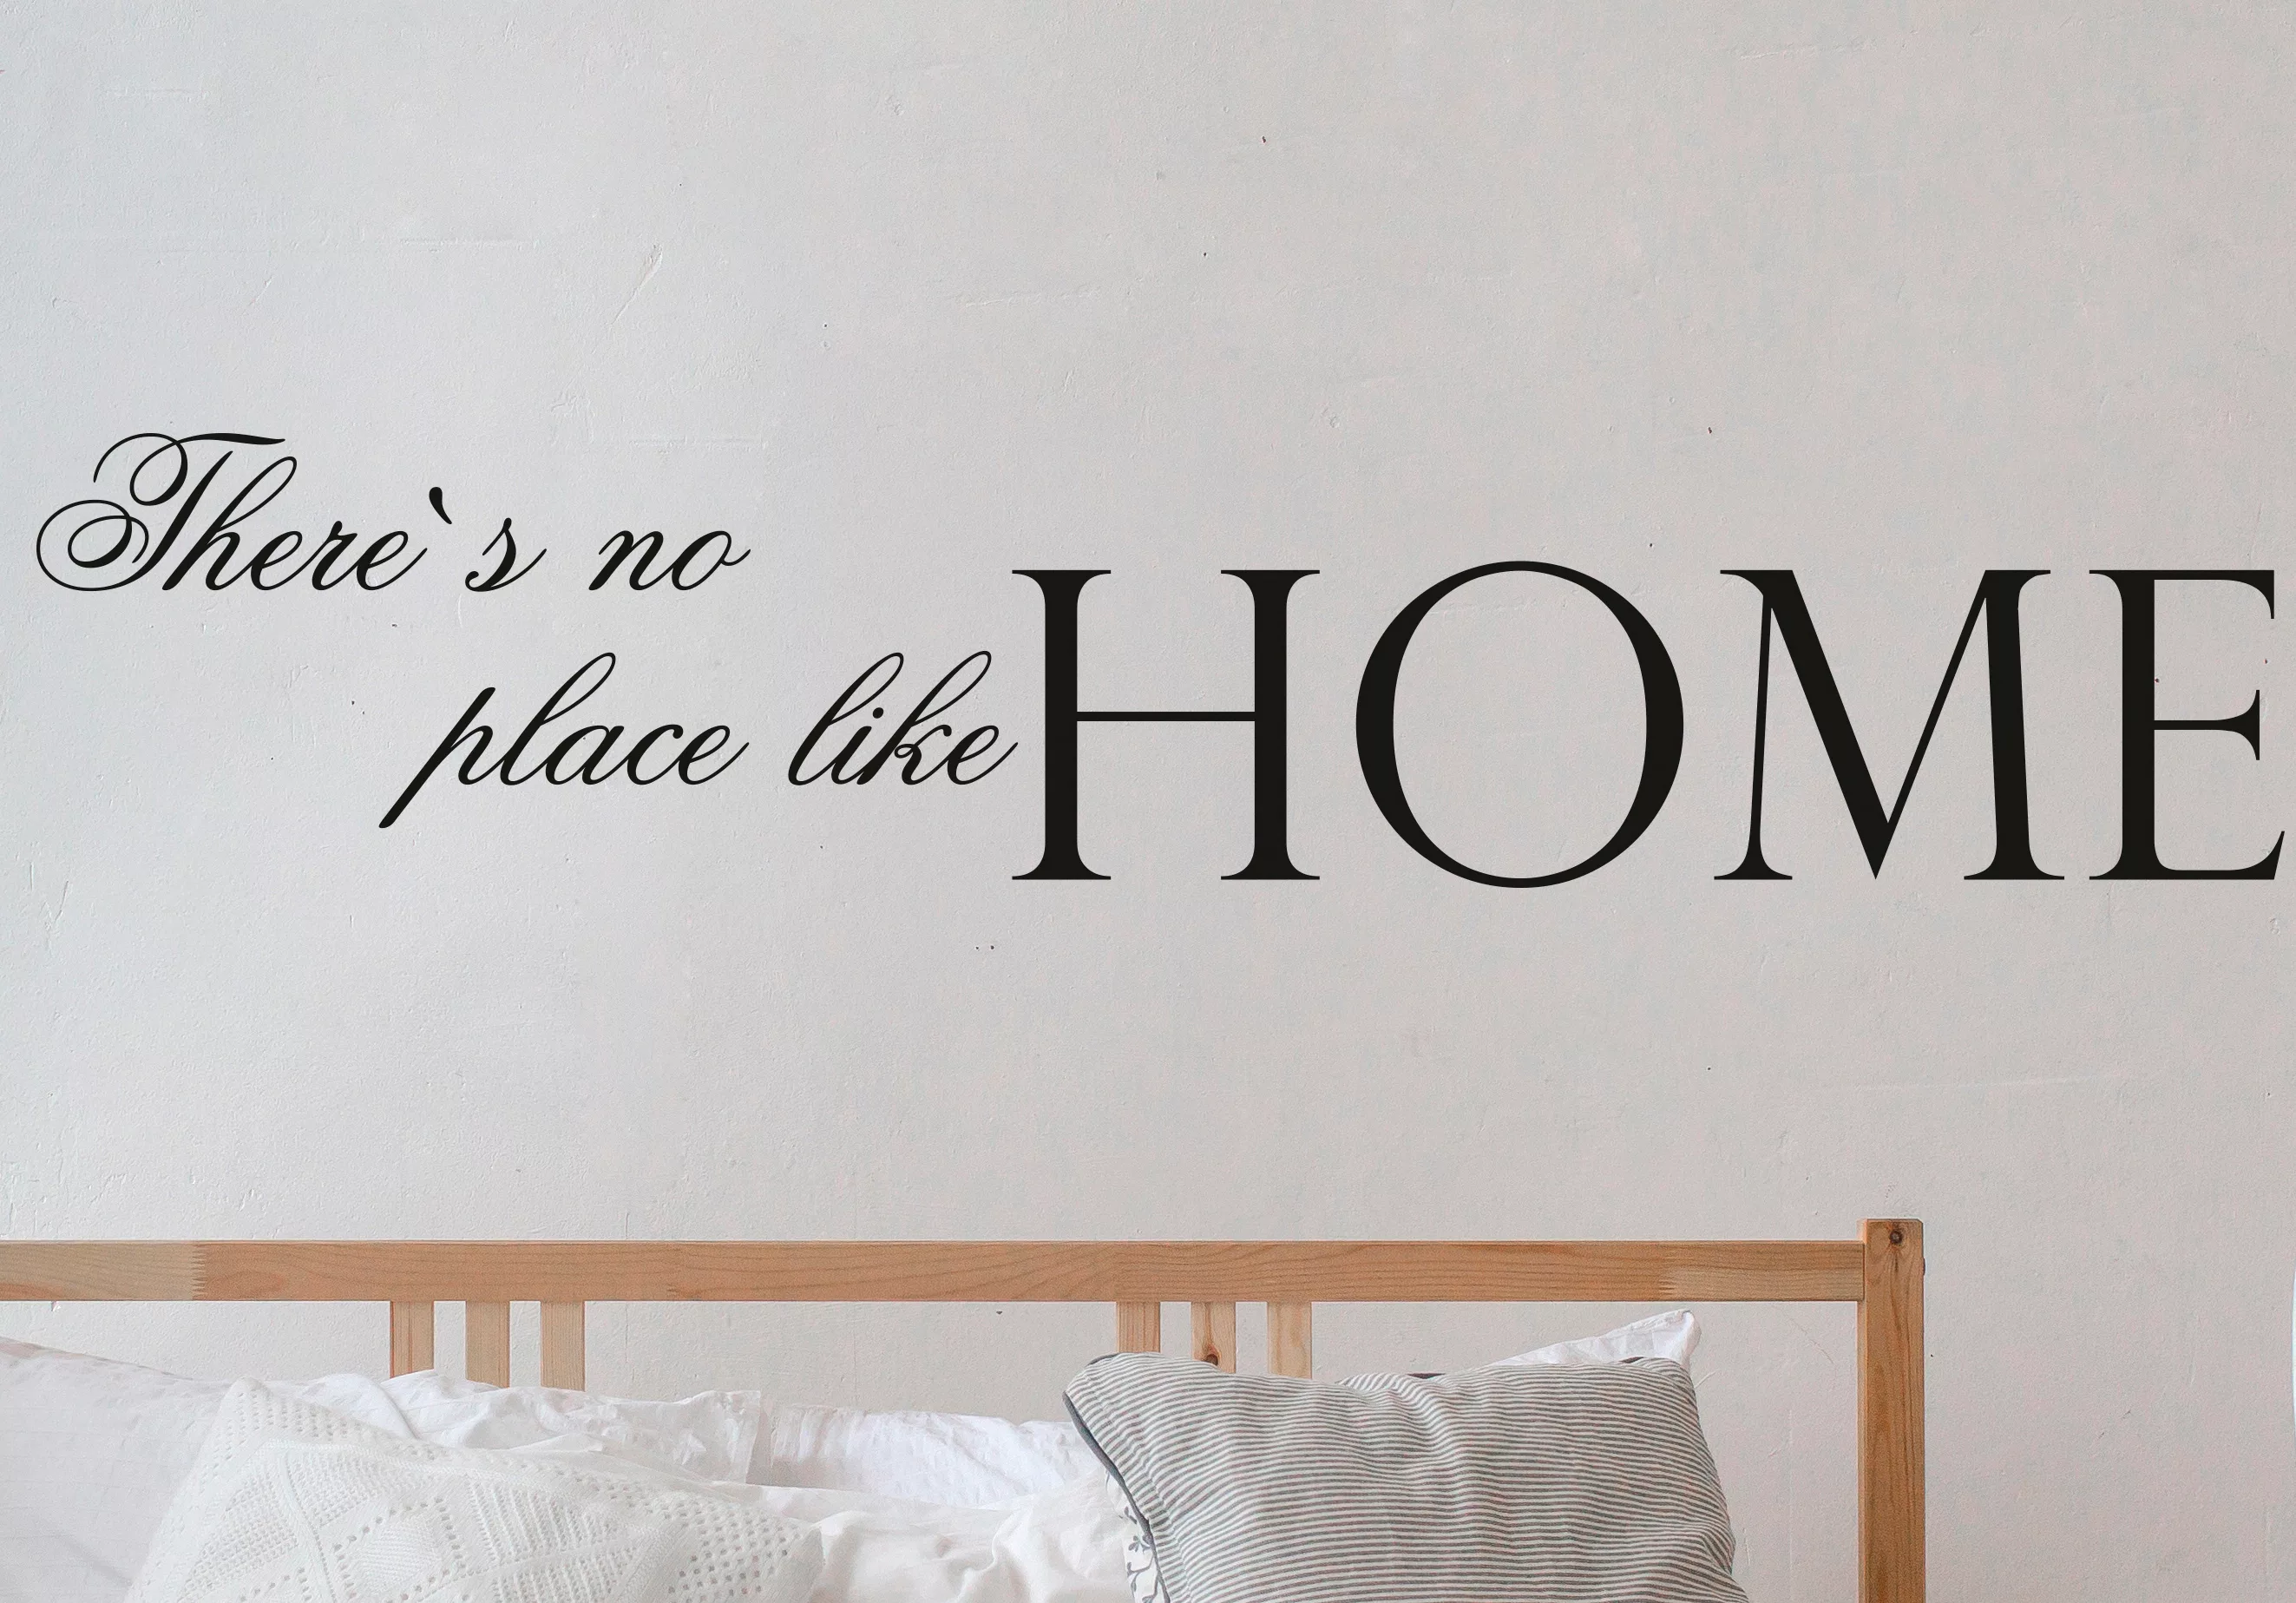 queence Wandtattoo "Theres no place like Home", hohe Klebkraft günstig online kaufen